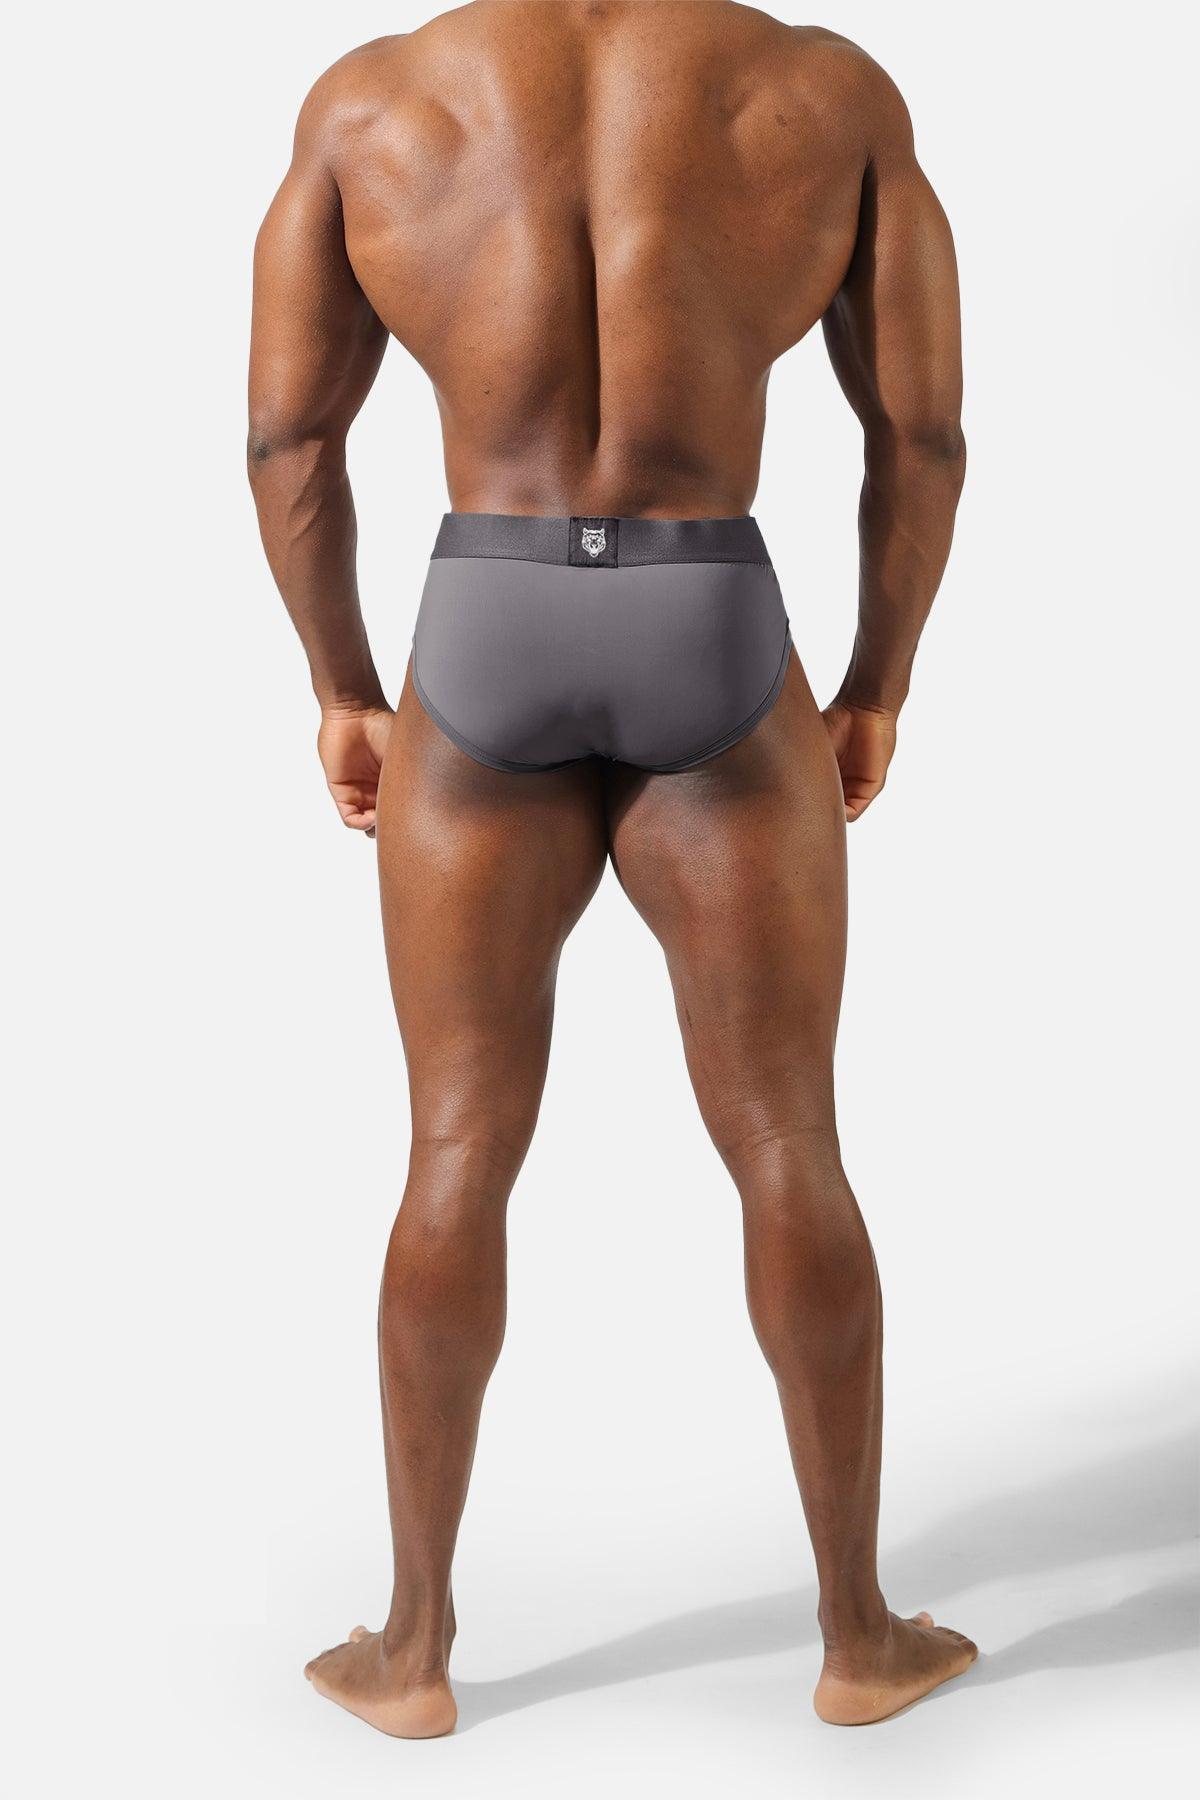 Men's Workout Mesh Briefs 2 Pack - Black & Dark Gray - Jed North Canada